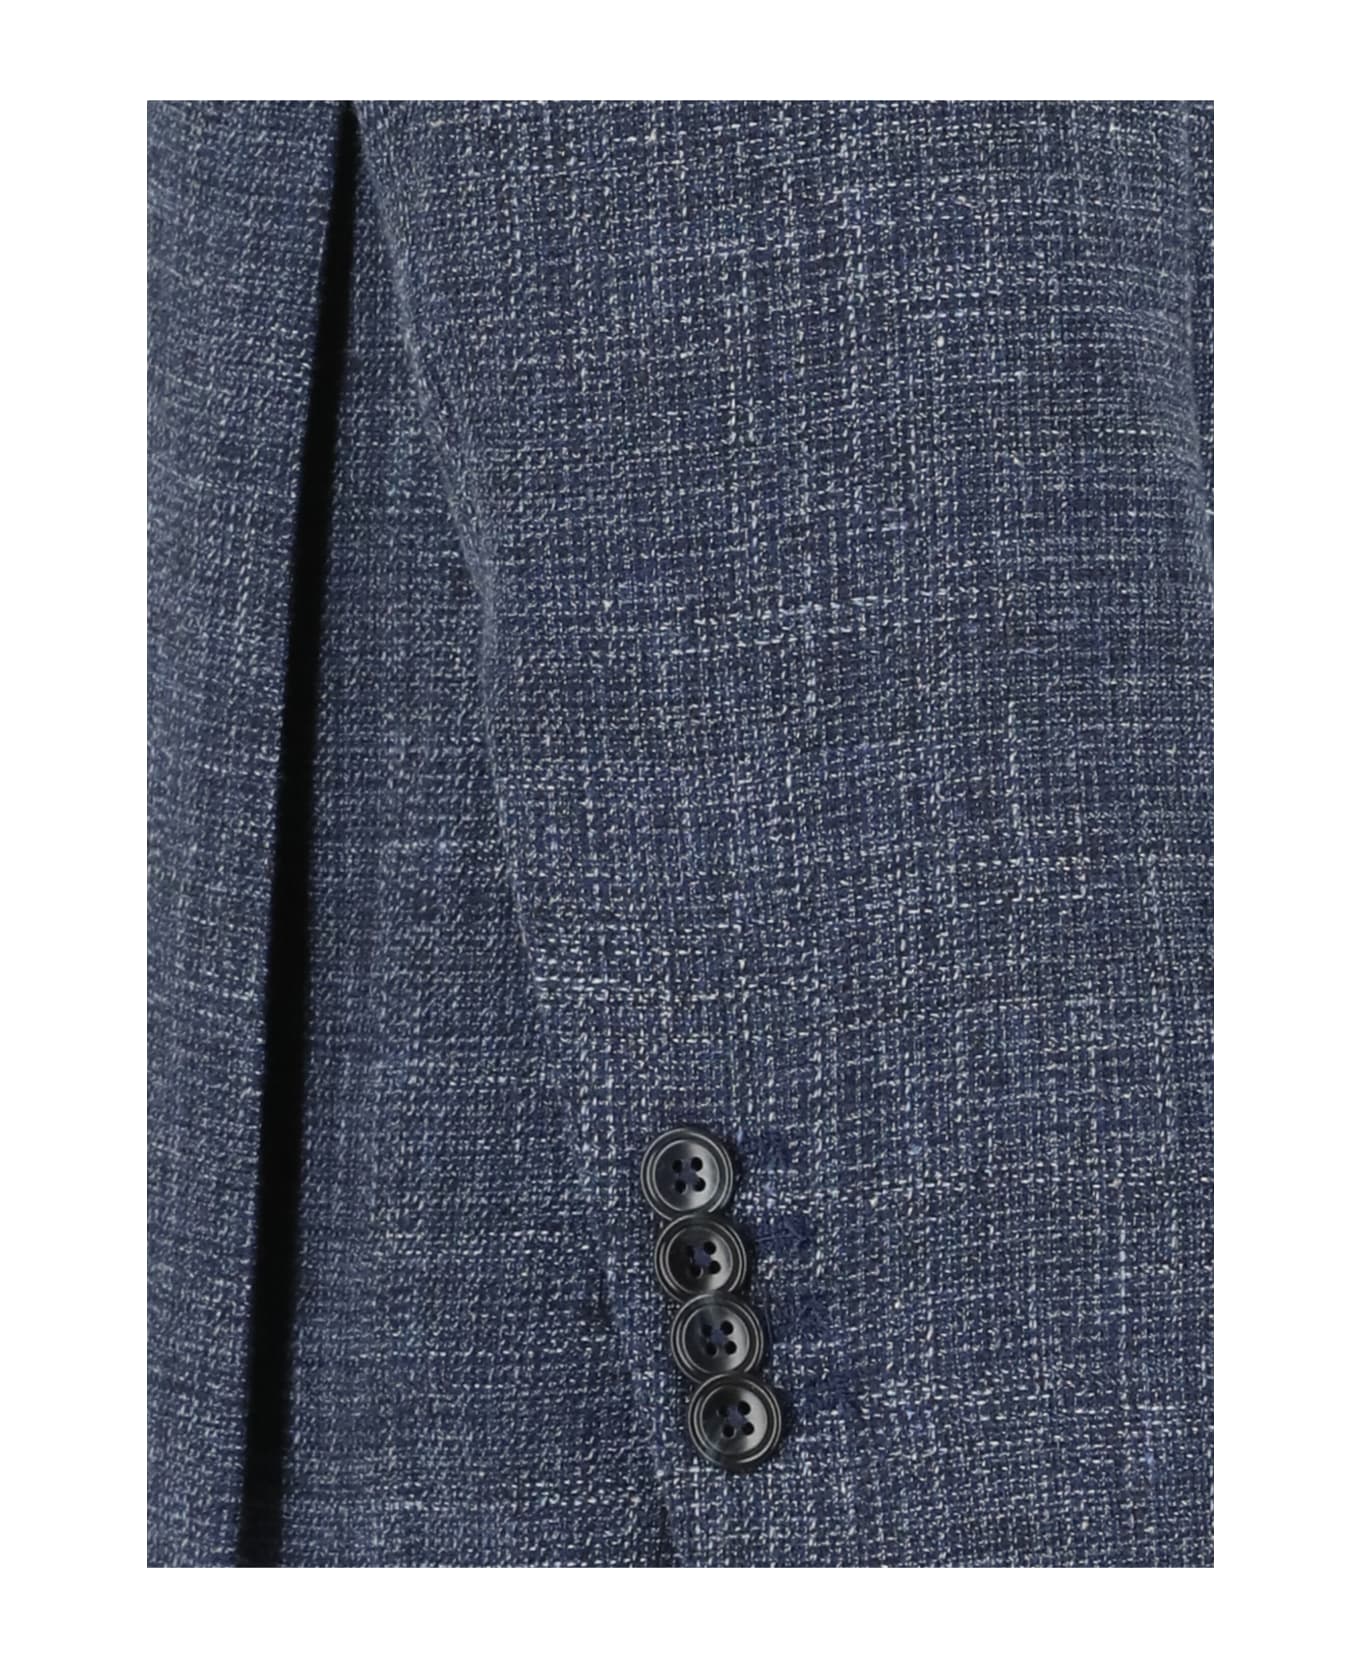 Tagliatore Wool And Cotton Jacket - Blue